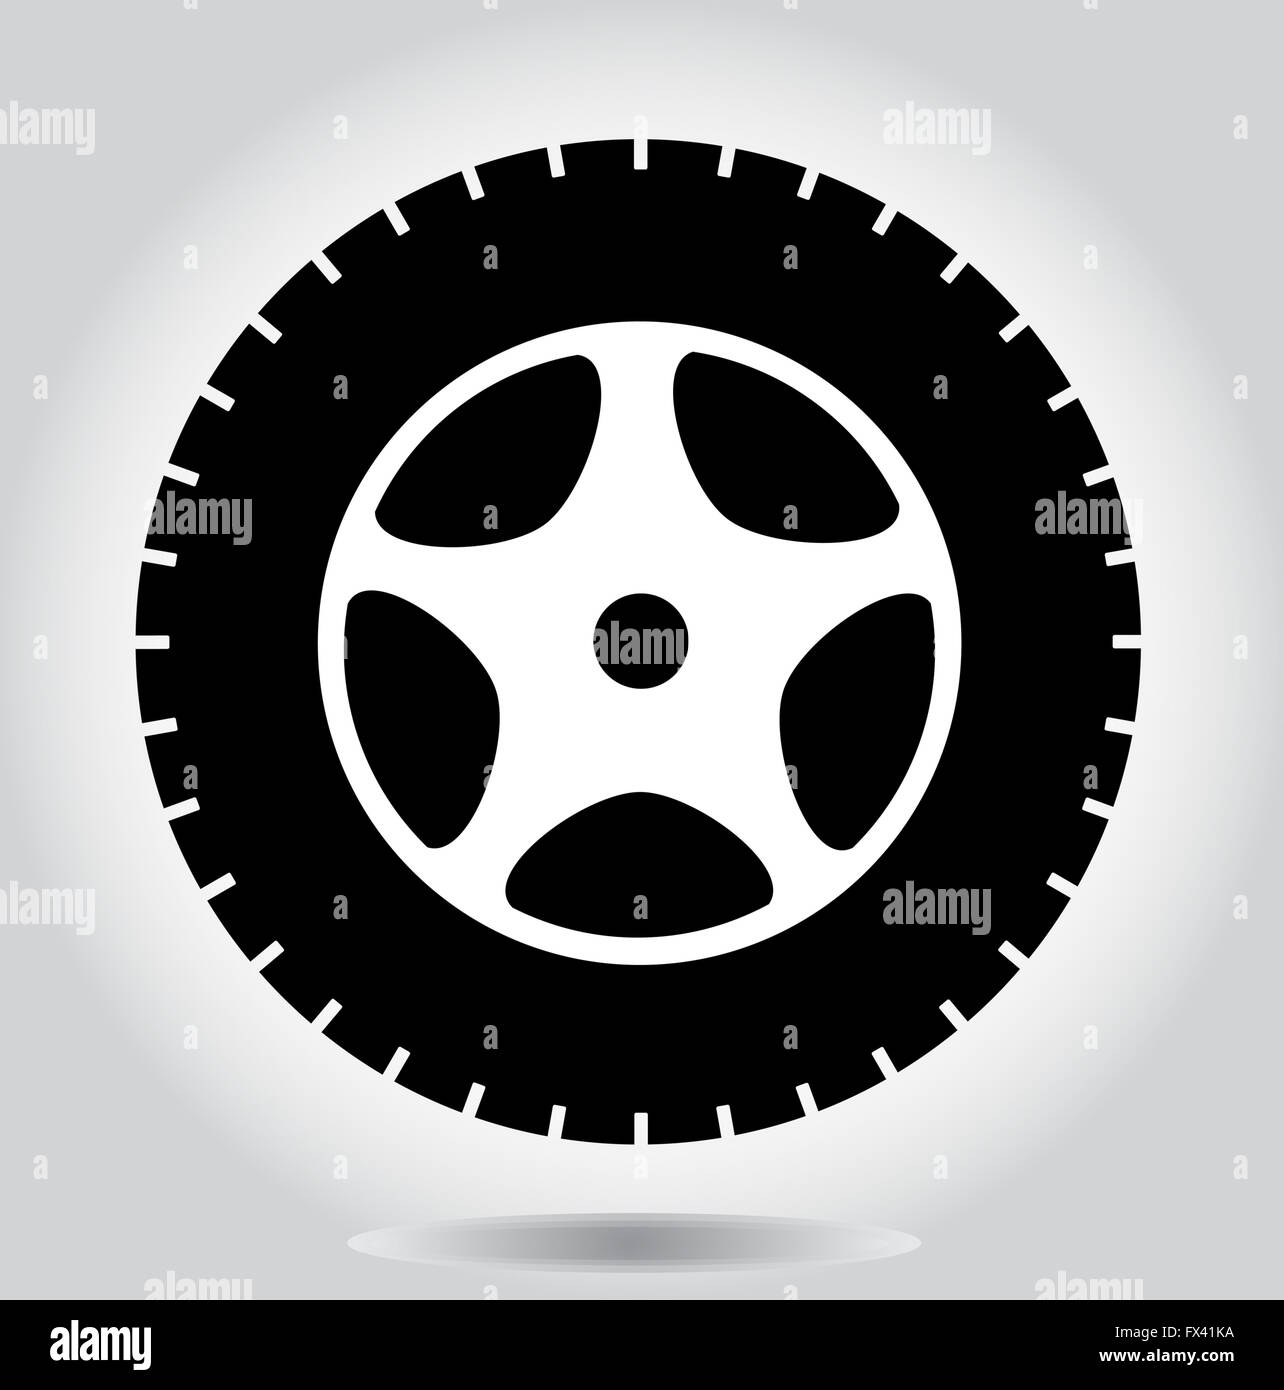 Wheel background Graphic Stock Photo